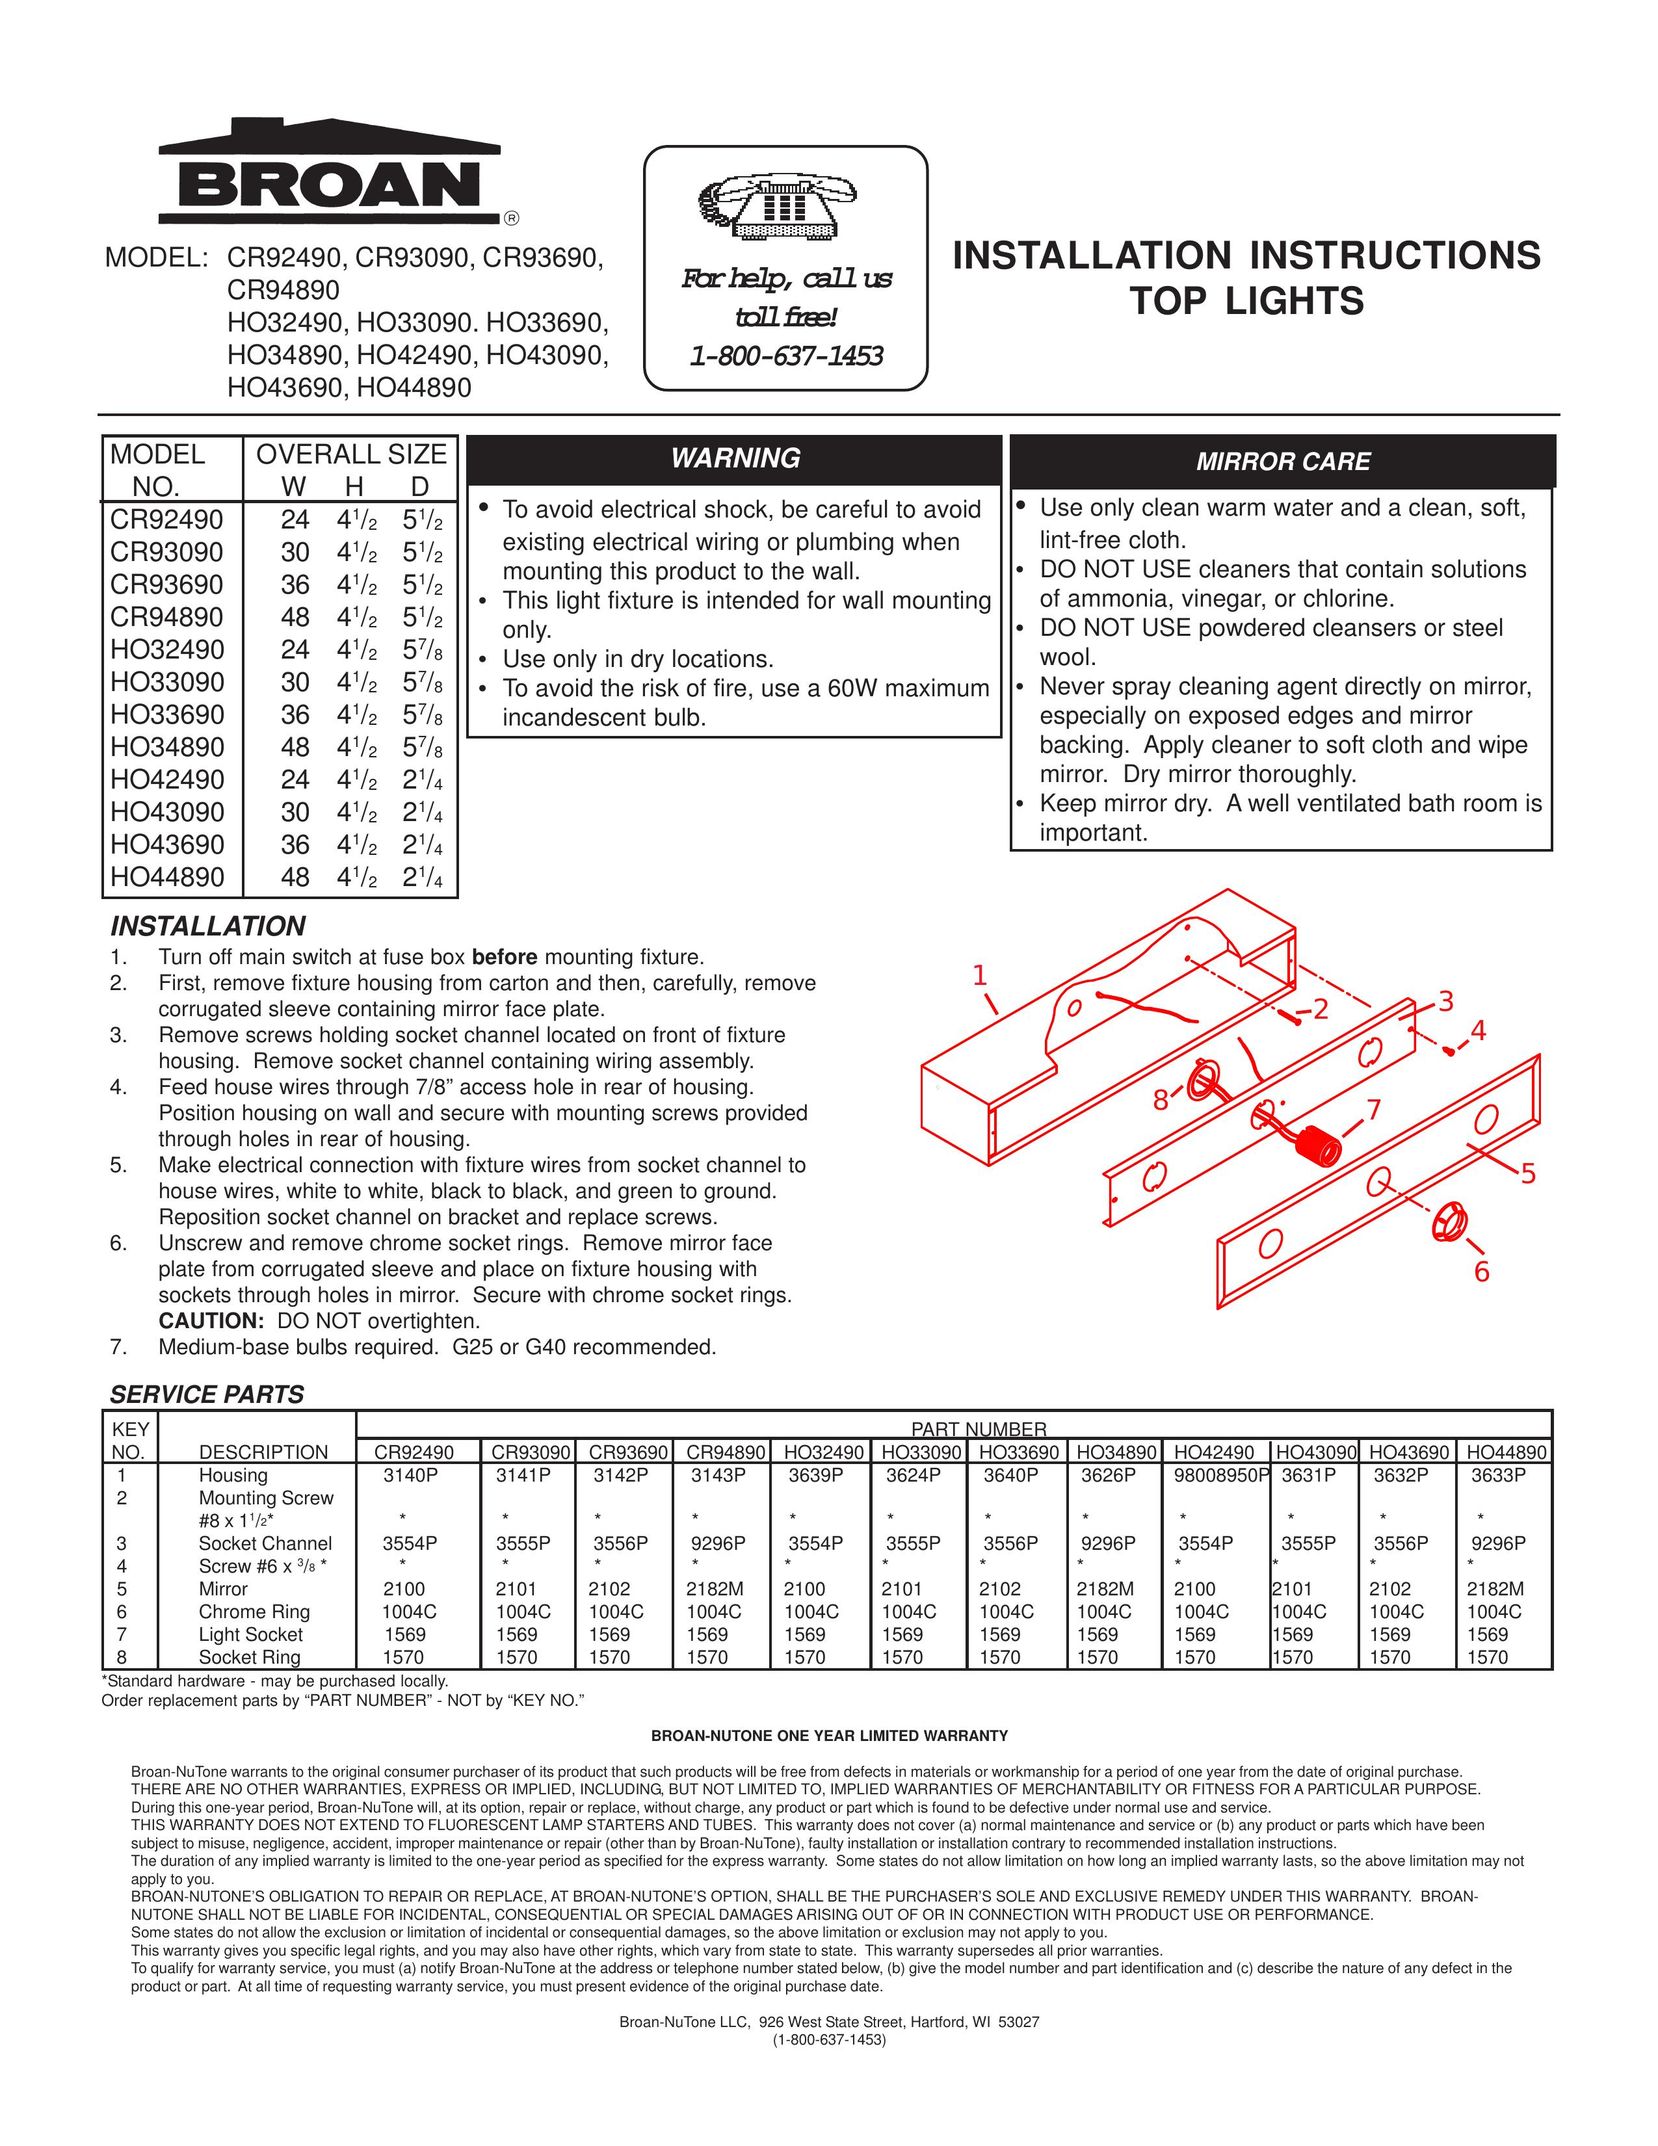 Broan CR94890 Indoor Furnishings User Manual